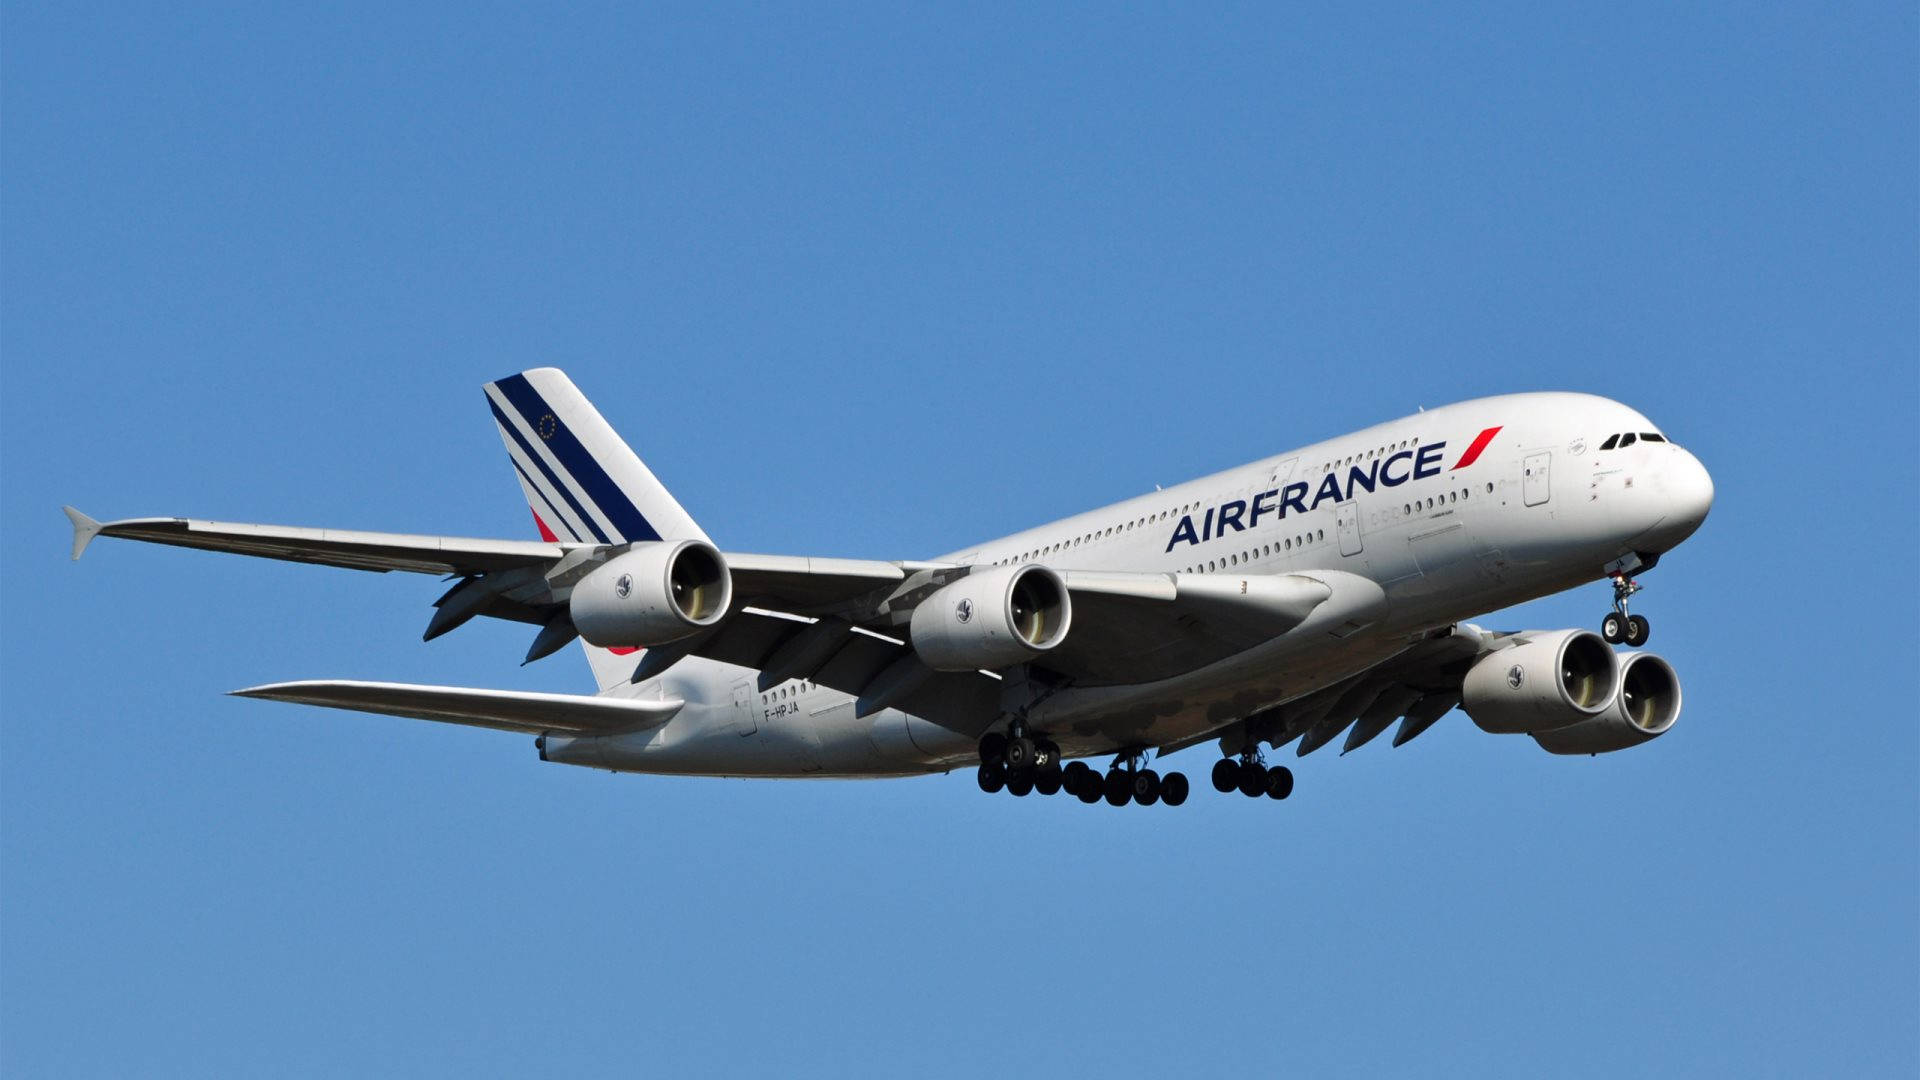 Aviónsuperjumbo De Air France Airbus En Cielos Despejados. Fondo de pantalla